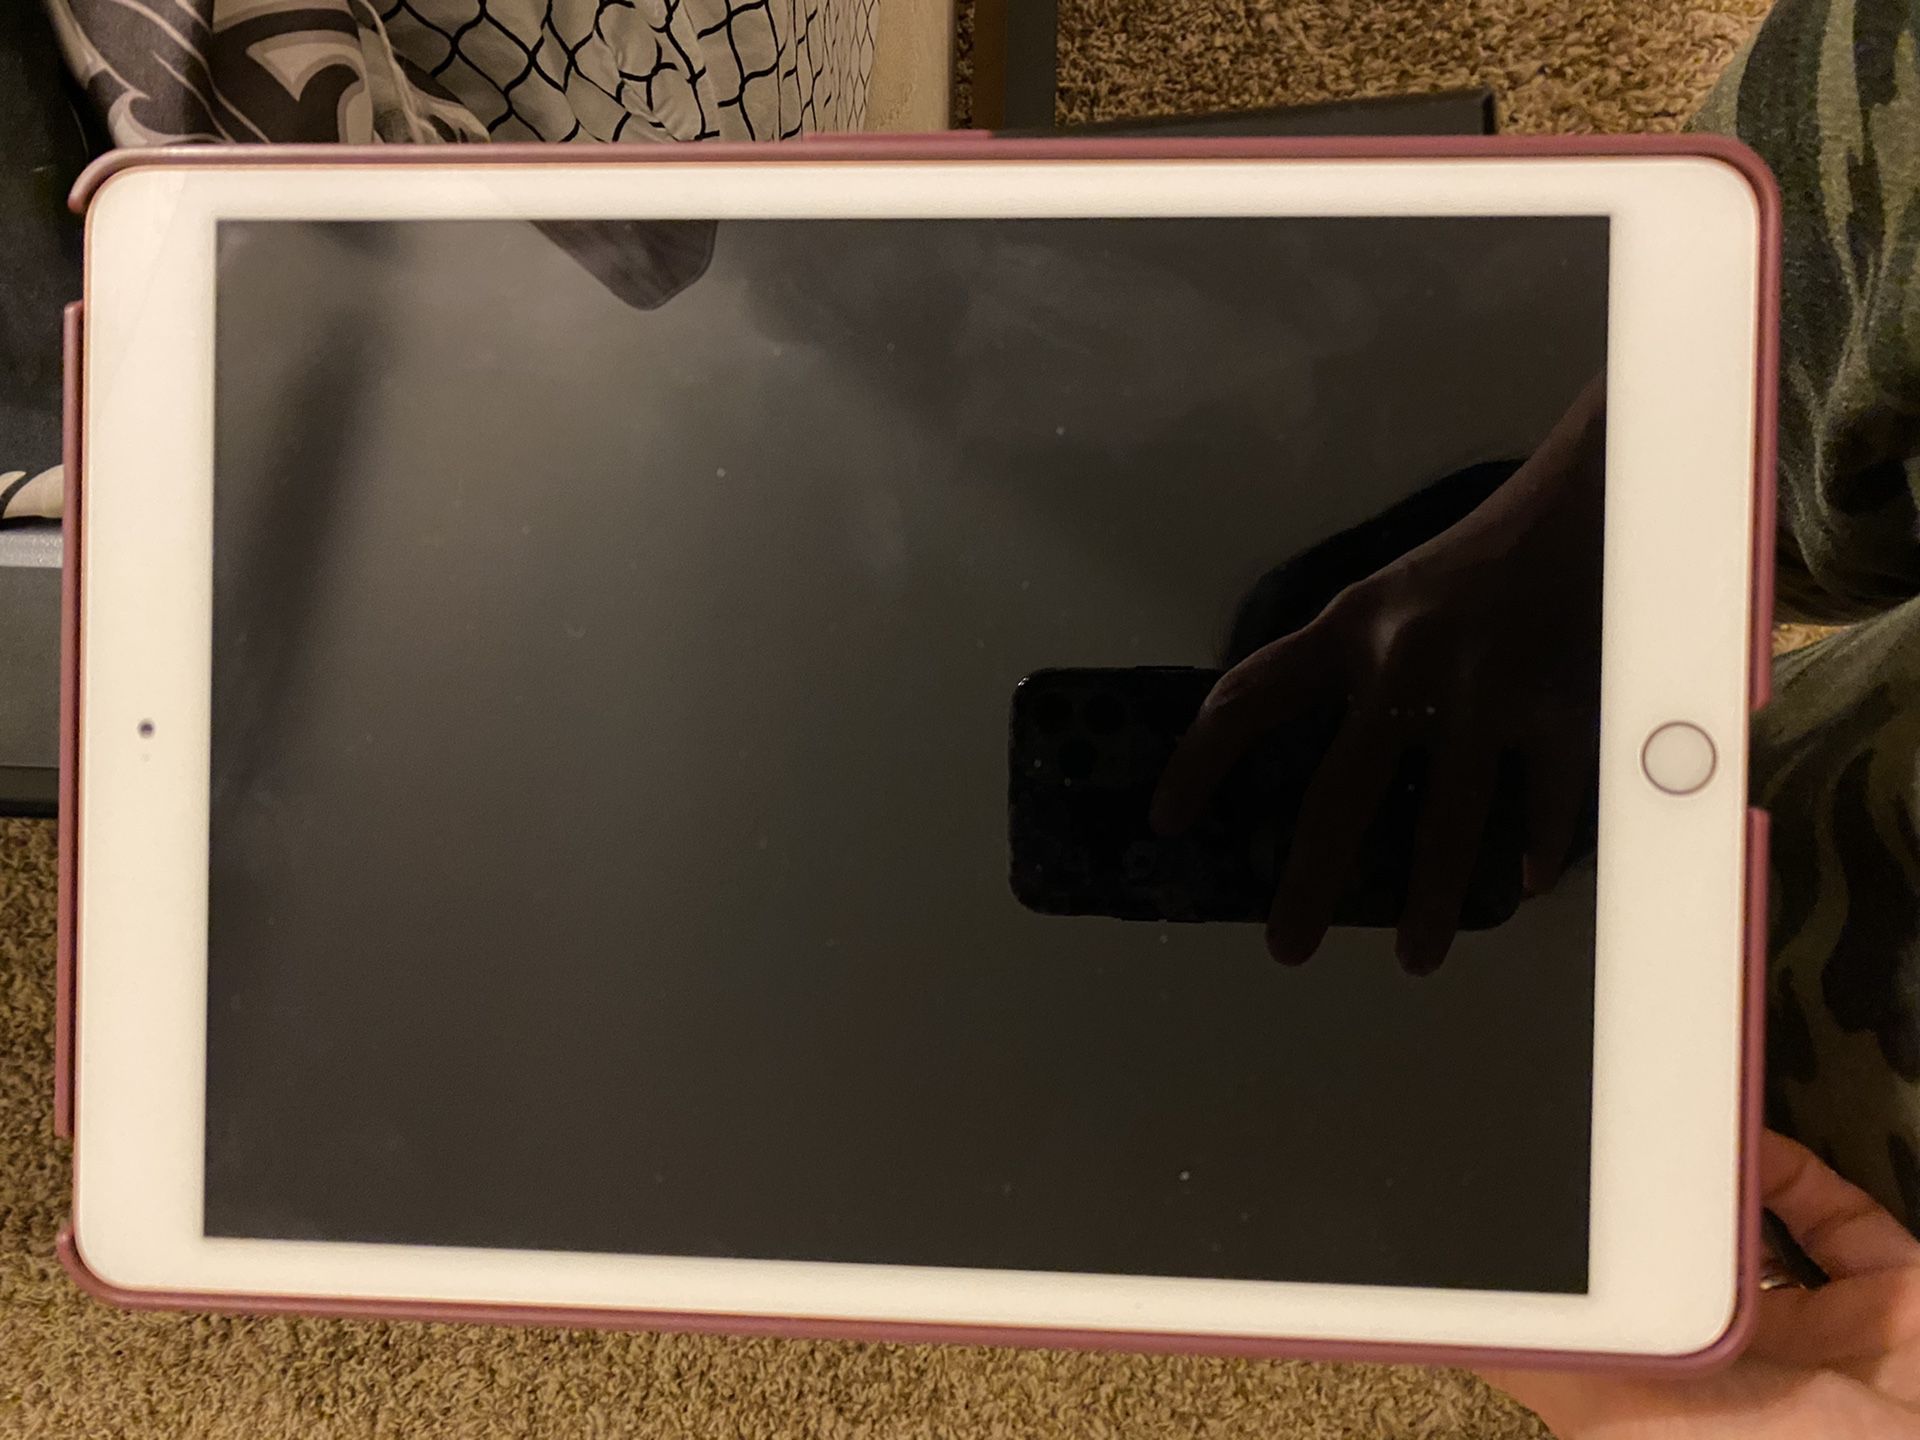 iPad 32gb Gold (latest 10.2 inch model) WiFi